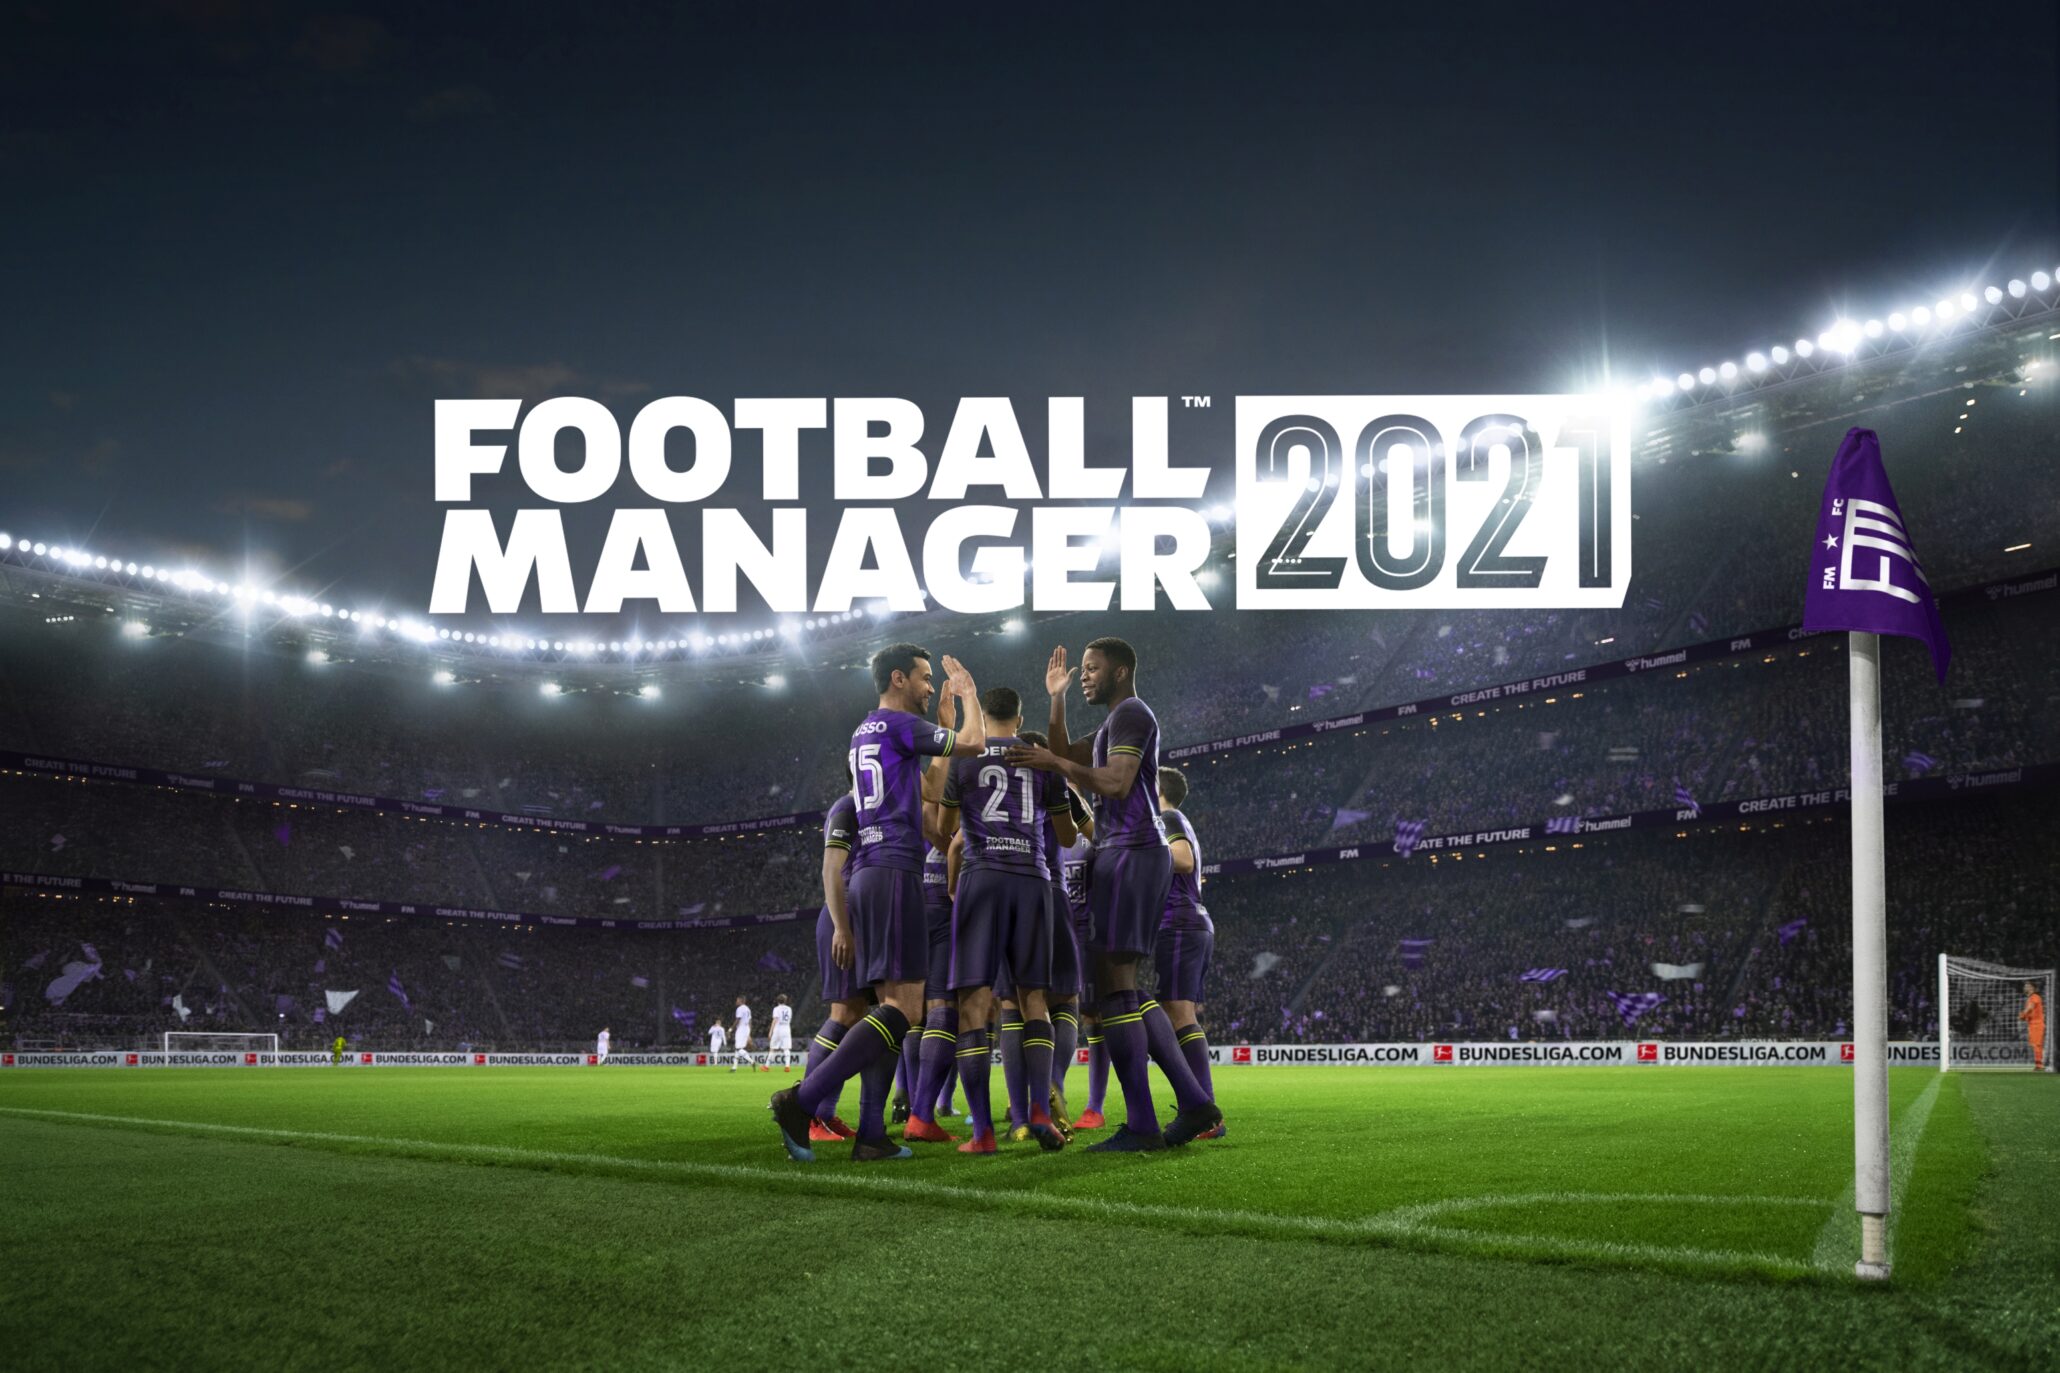 Football-Manager-2021-Date-Announced-01-Header-2060×1373-c3de29eb